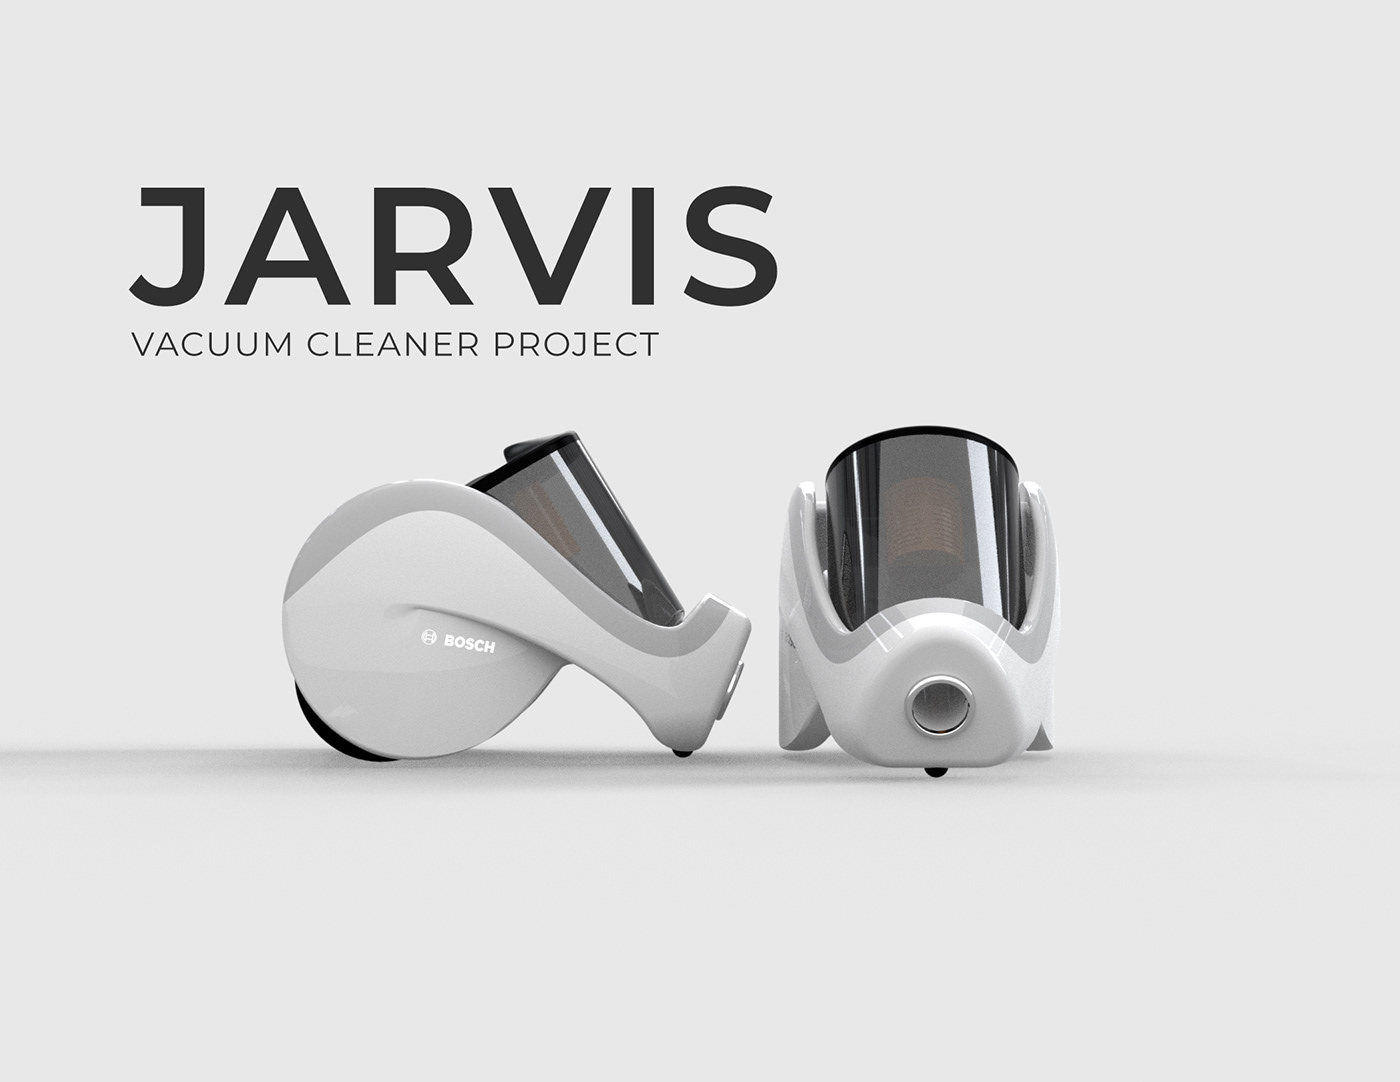 3D Render vacuum cleaner visualization